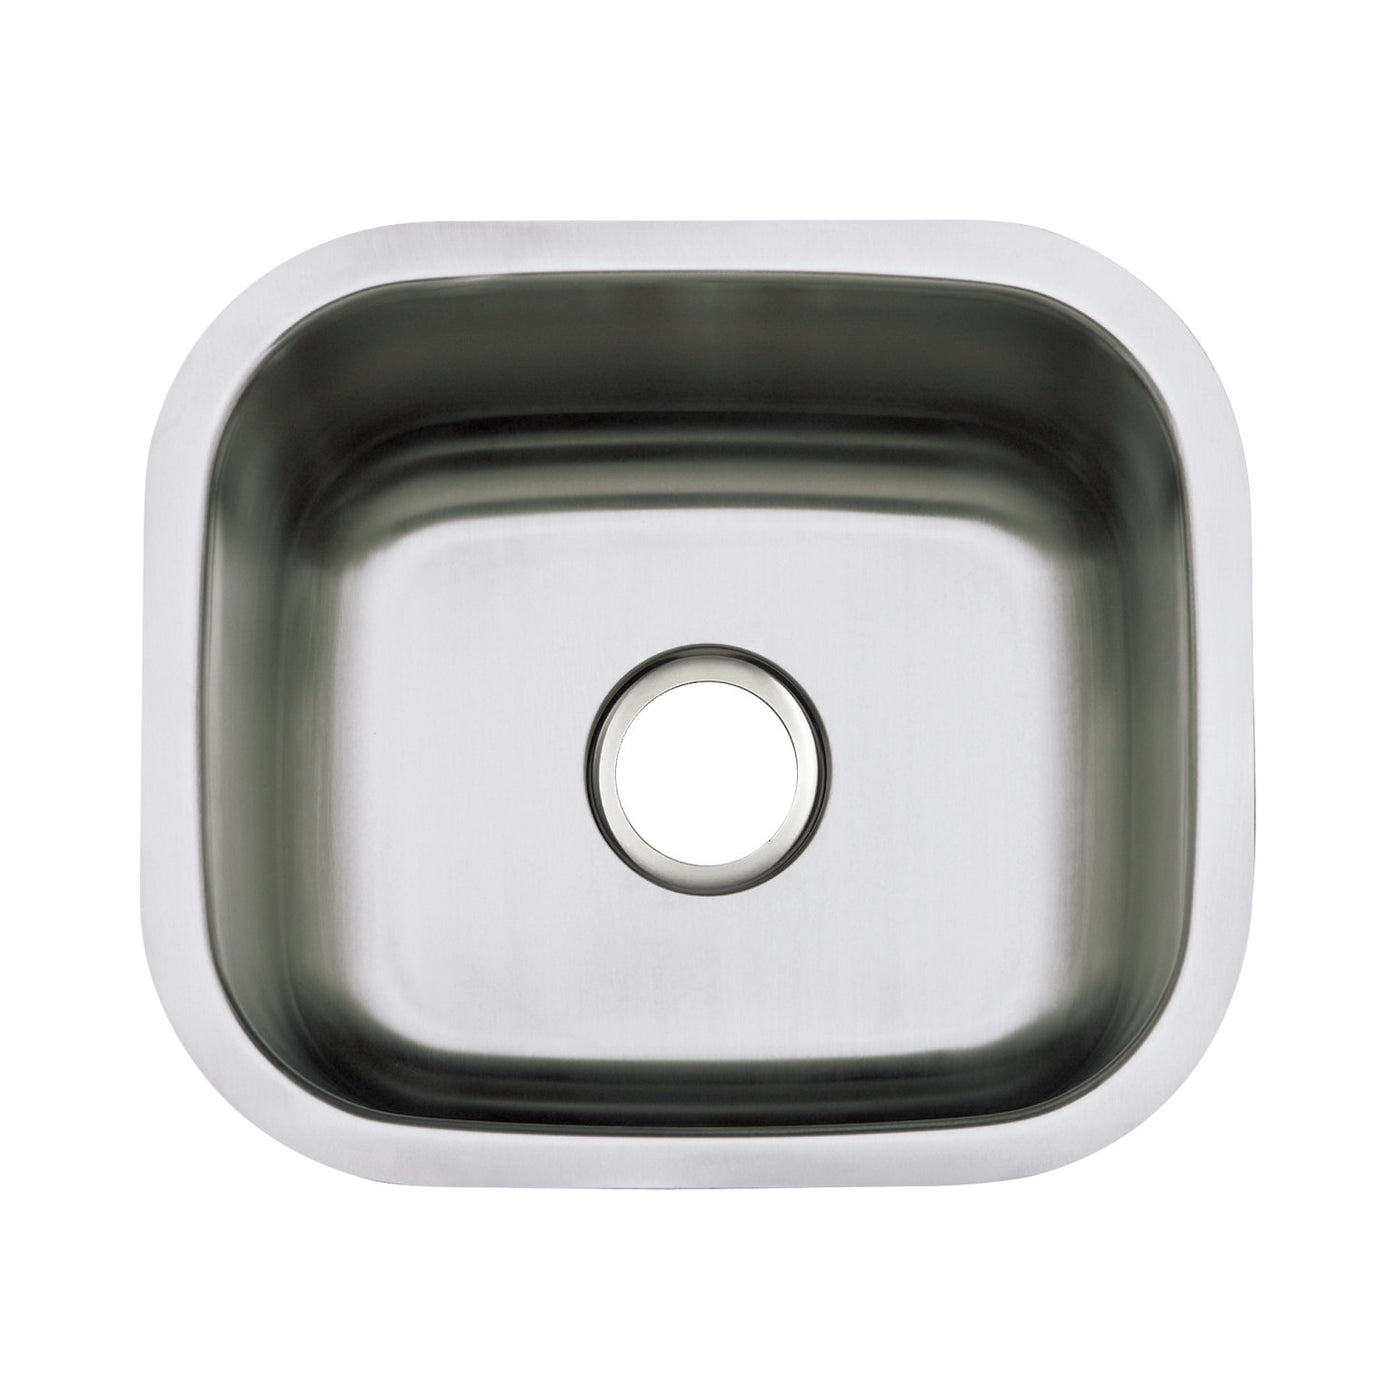 Elements of Design EU14167BN Undermount Single Bowl Kitchen Sink, Brushed